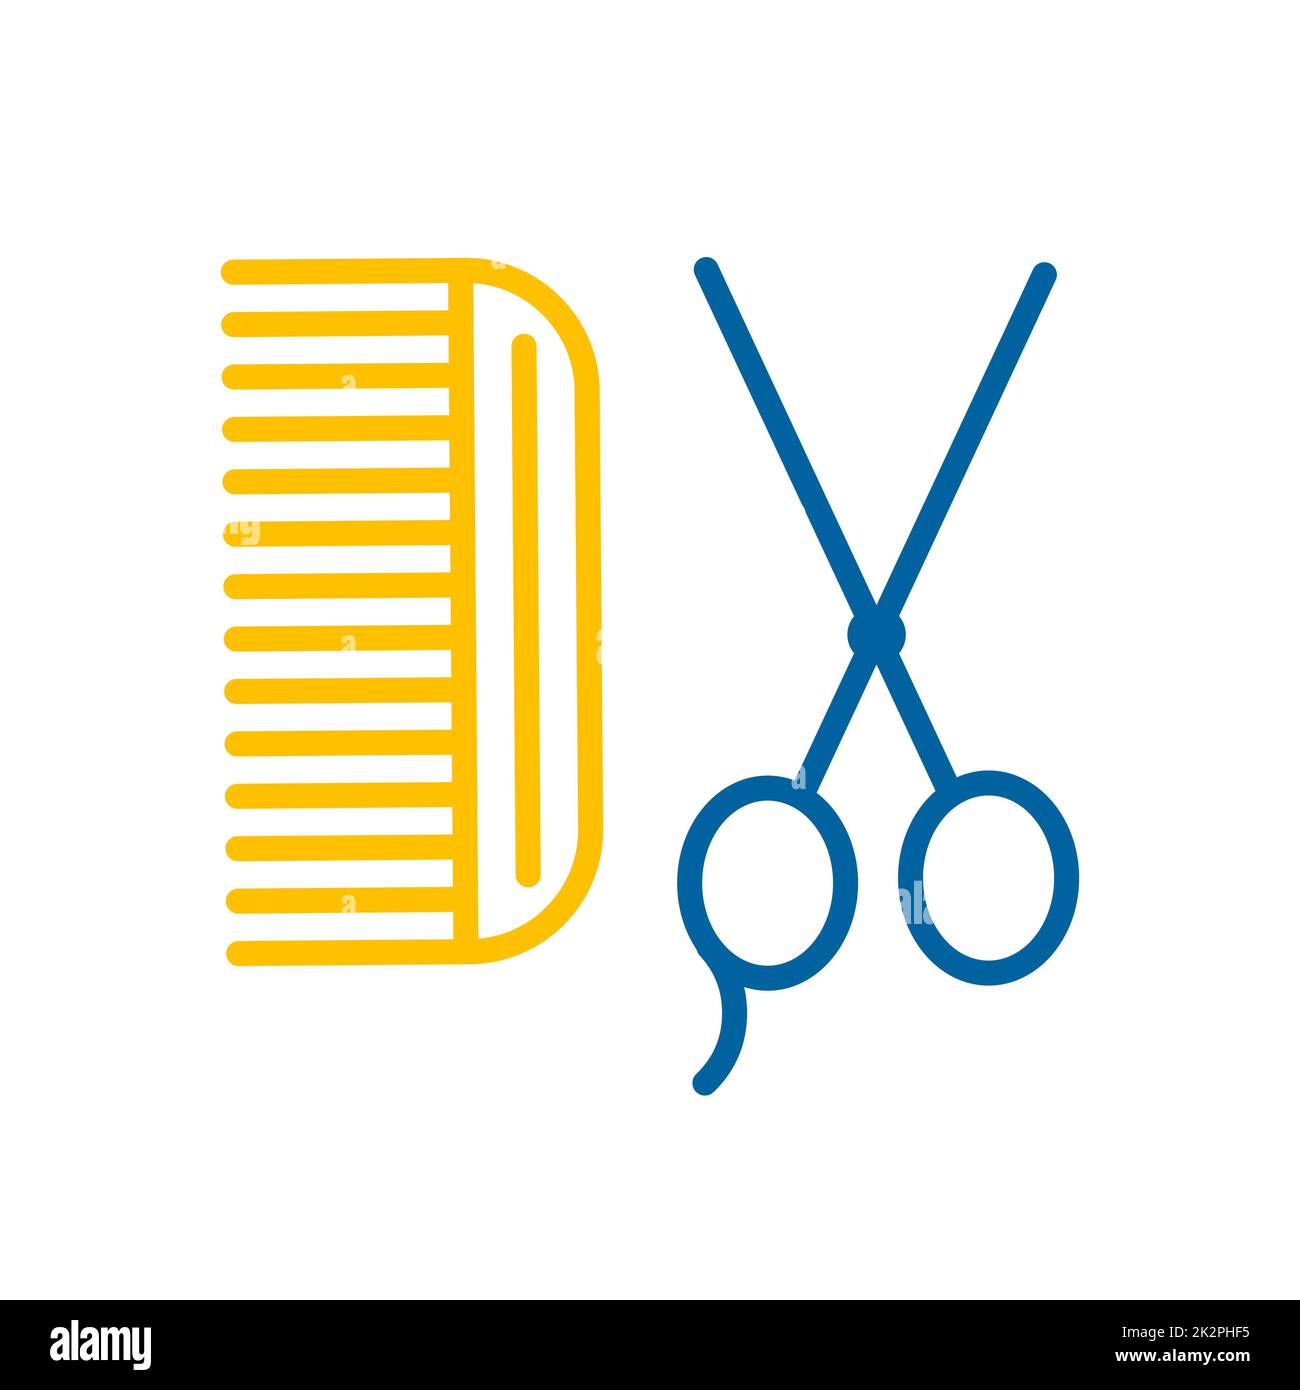 Animal grooming, hairbrush and scissors icon Stock Photo